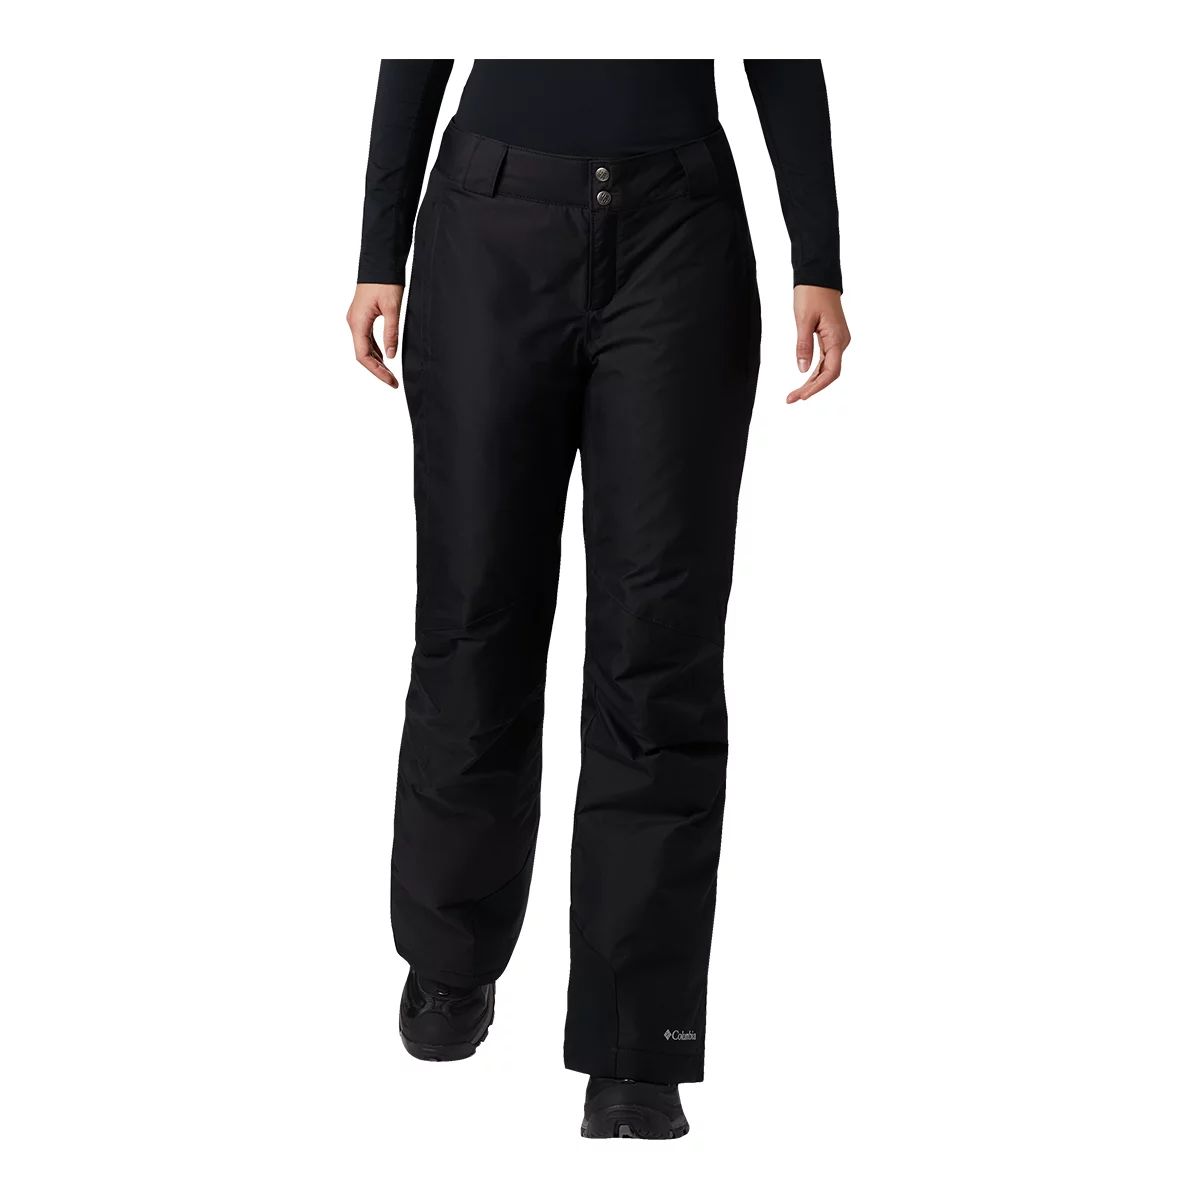 Columbia side pocket sweatpants in black